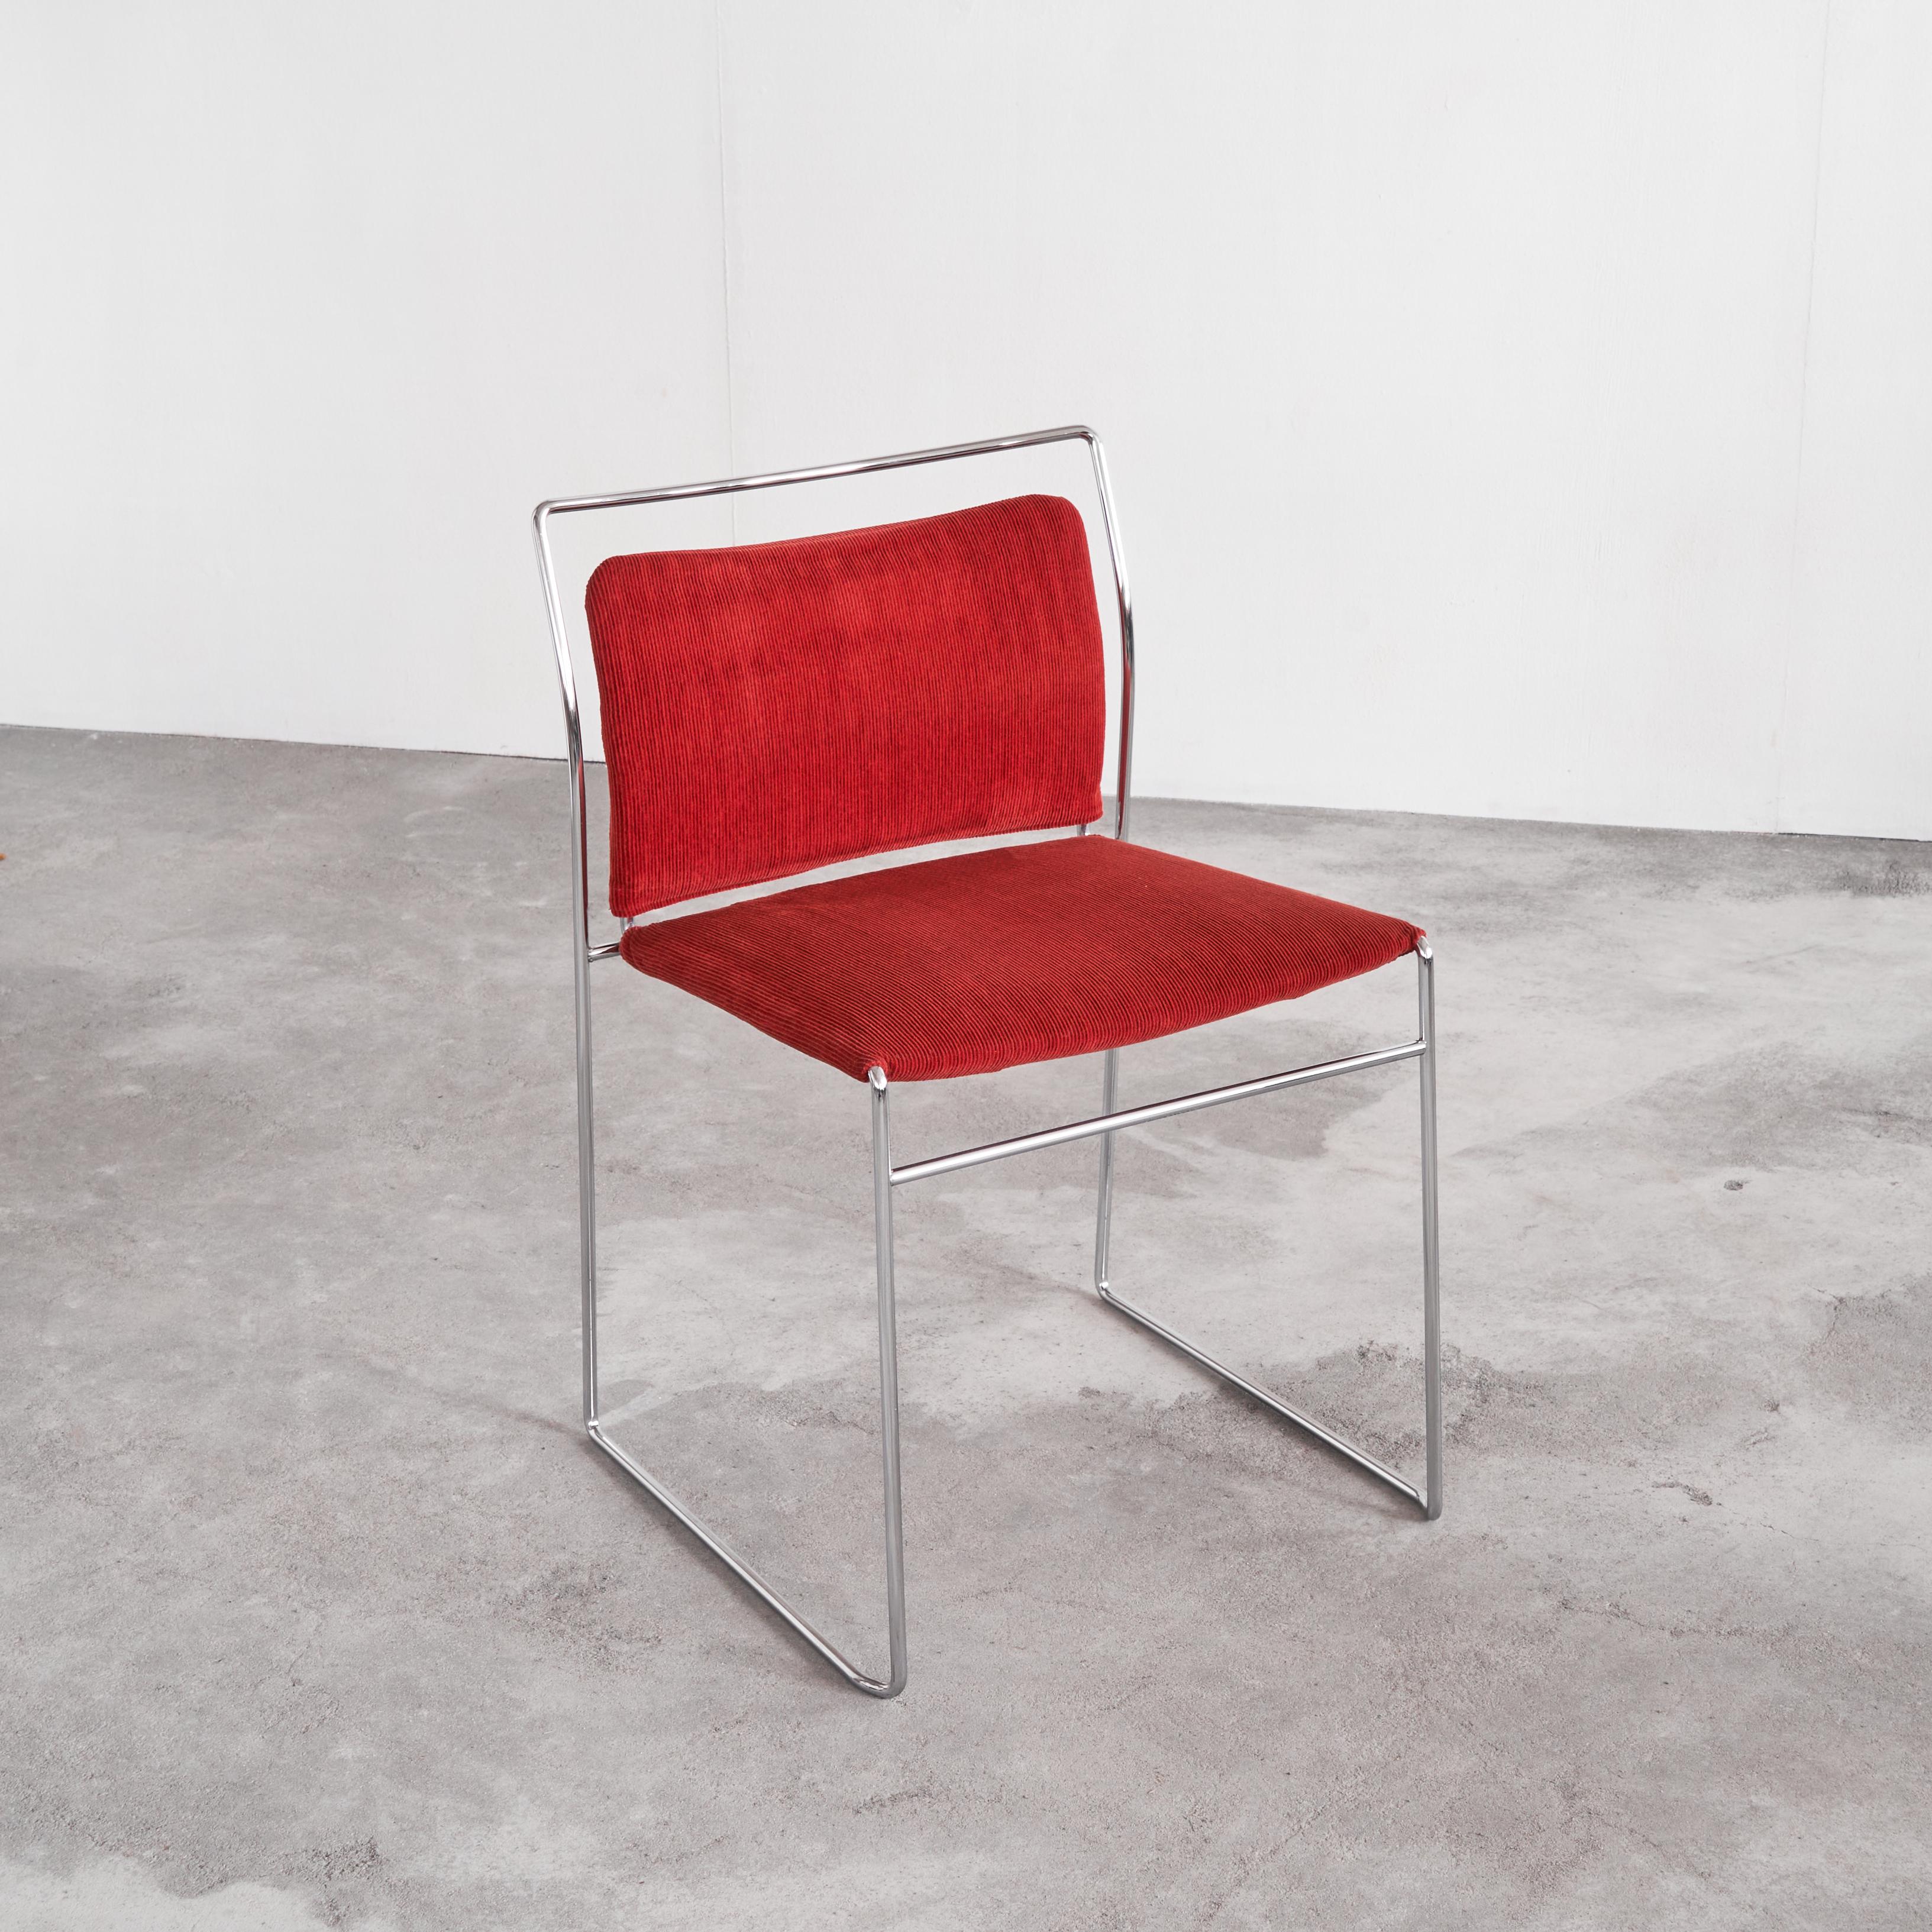 Kazuhide Takahama 'Tulu' Chair in Red Corduroy for Simon International, Italy, 1968.

Beautiful slender and sleek (side) chair by renowned designer Kazuhide Takahama (1930-2010). He designed this chair called ‘Tulu’ for Dino Gavina and his company